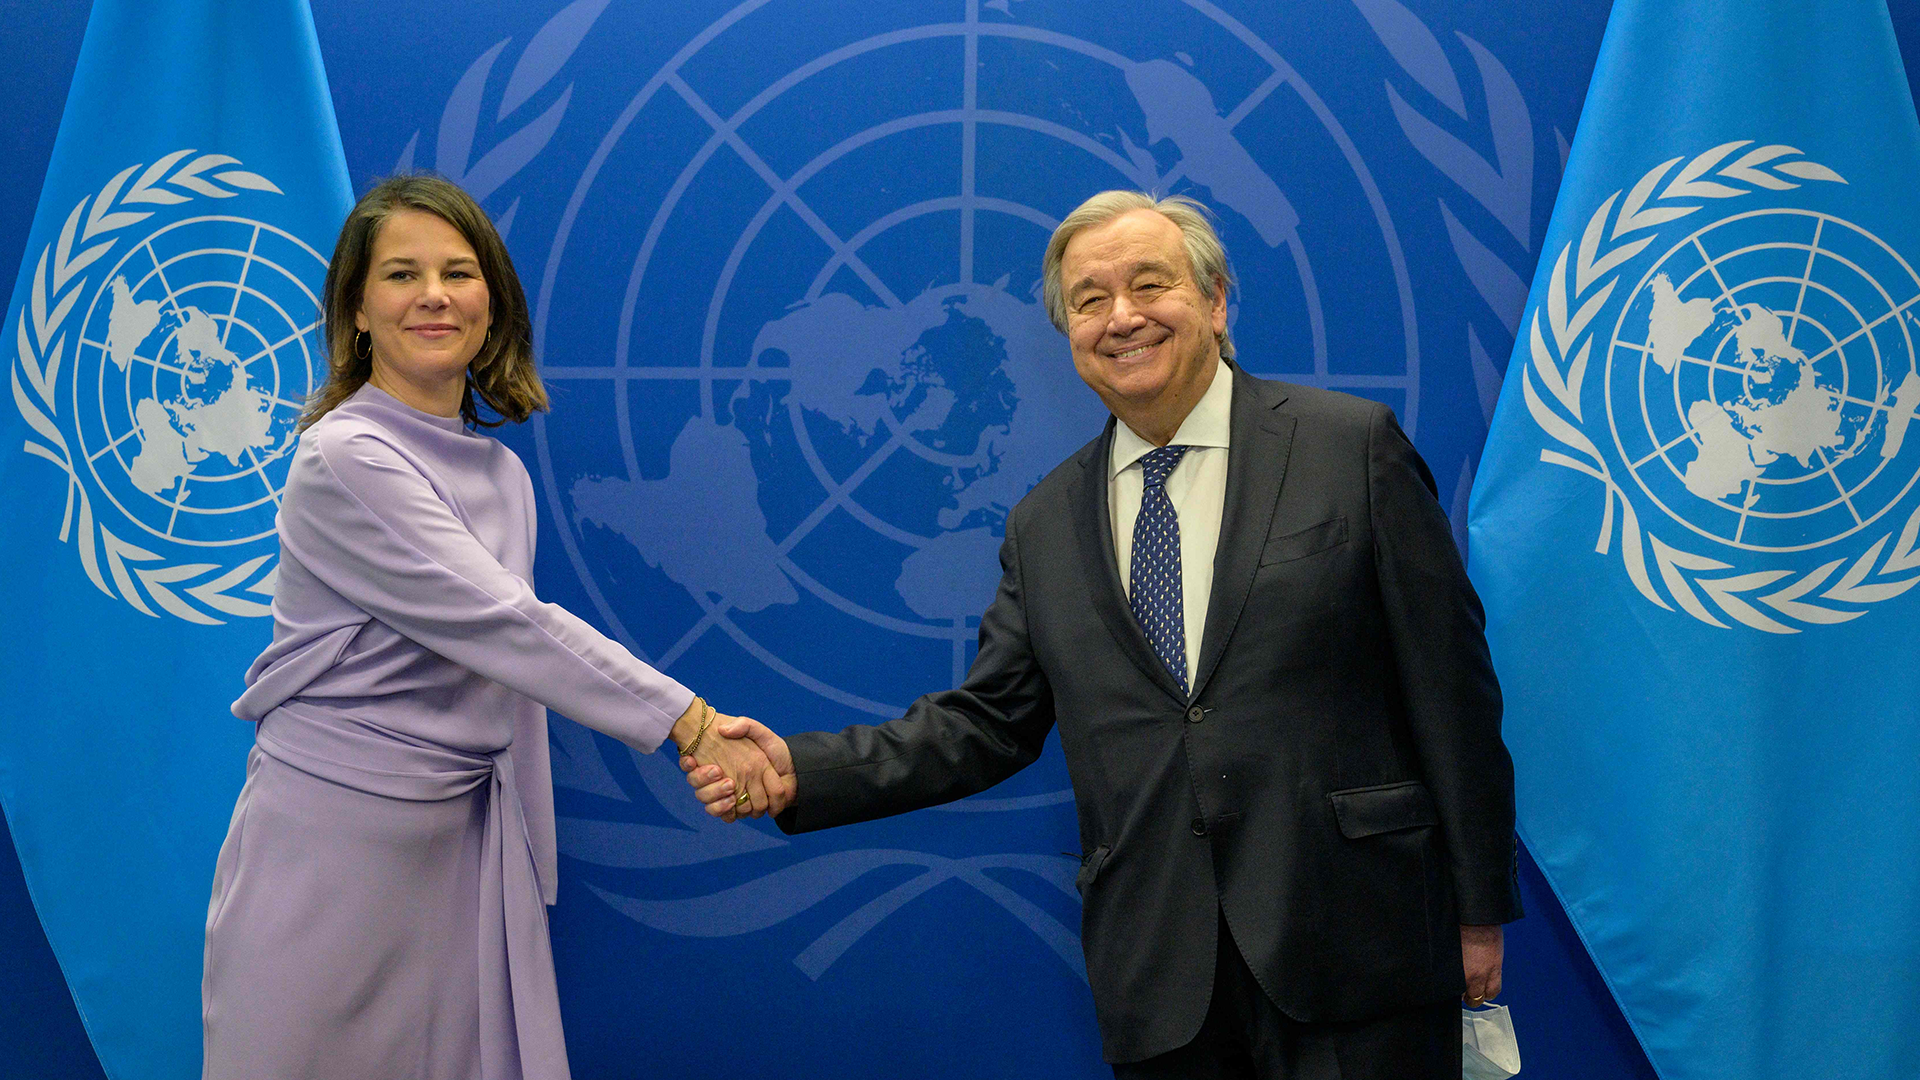 Gender equality is '300 years away,' U.N. chief warns - The Washington Post